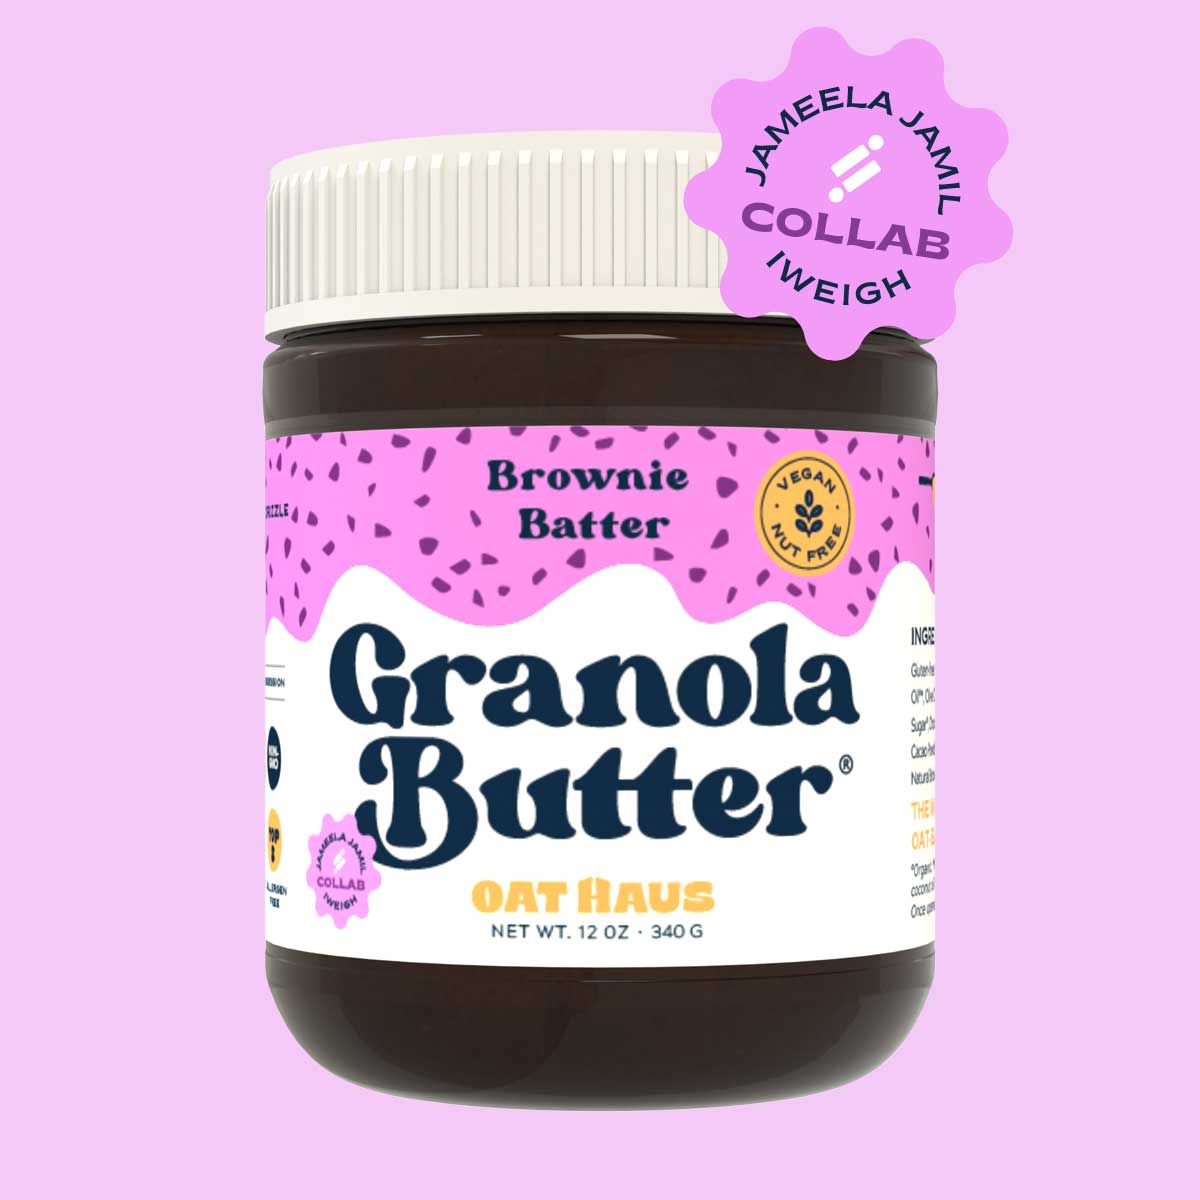 Brownie Batter Granola Butter | Nut-free, Vegan, GF Spread